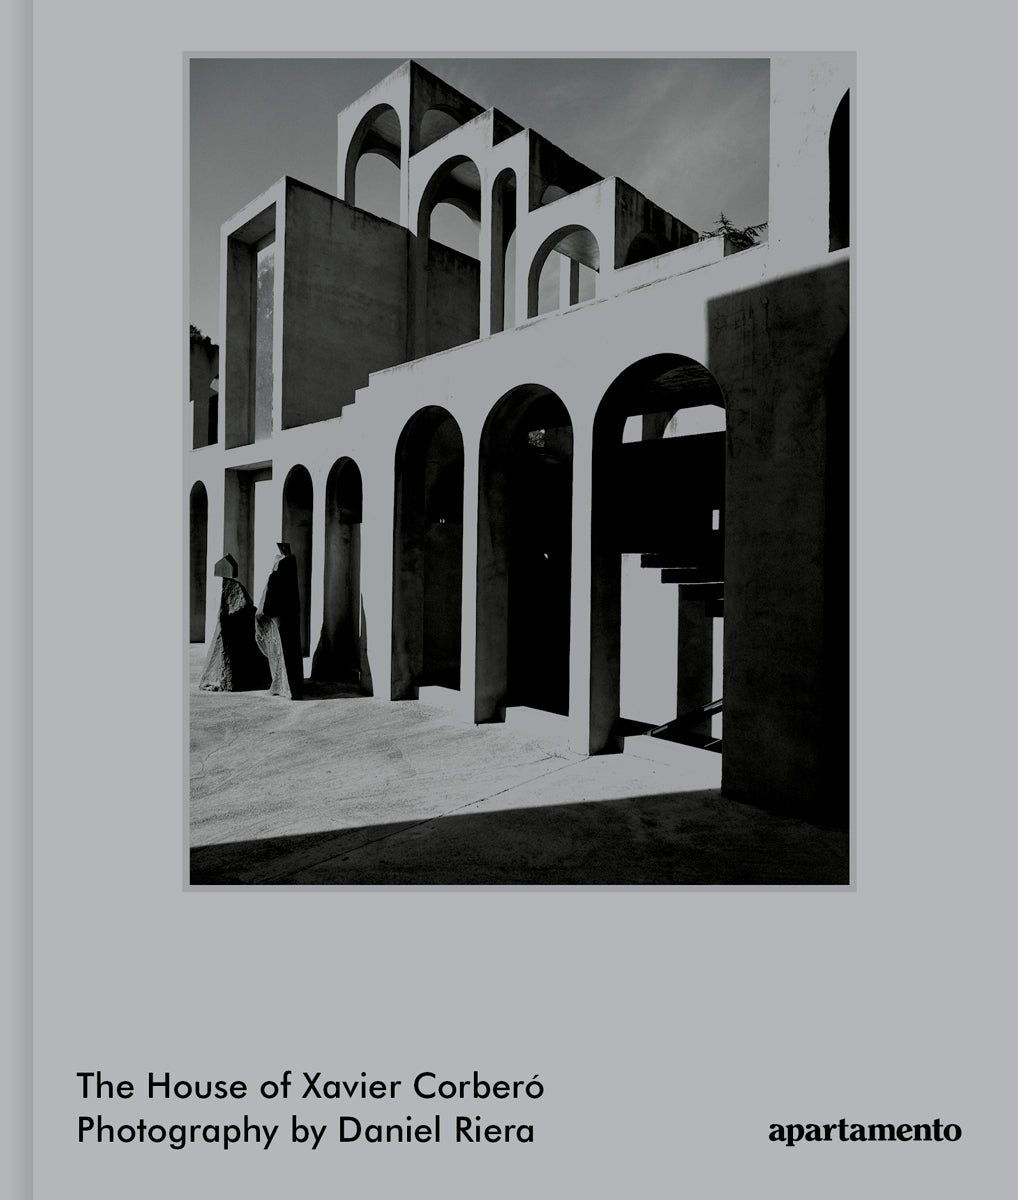 The House of Xavier Corbero